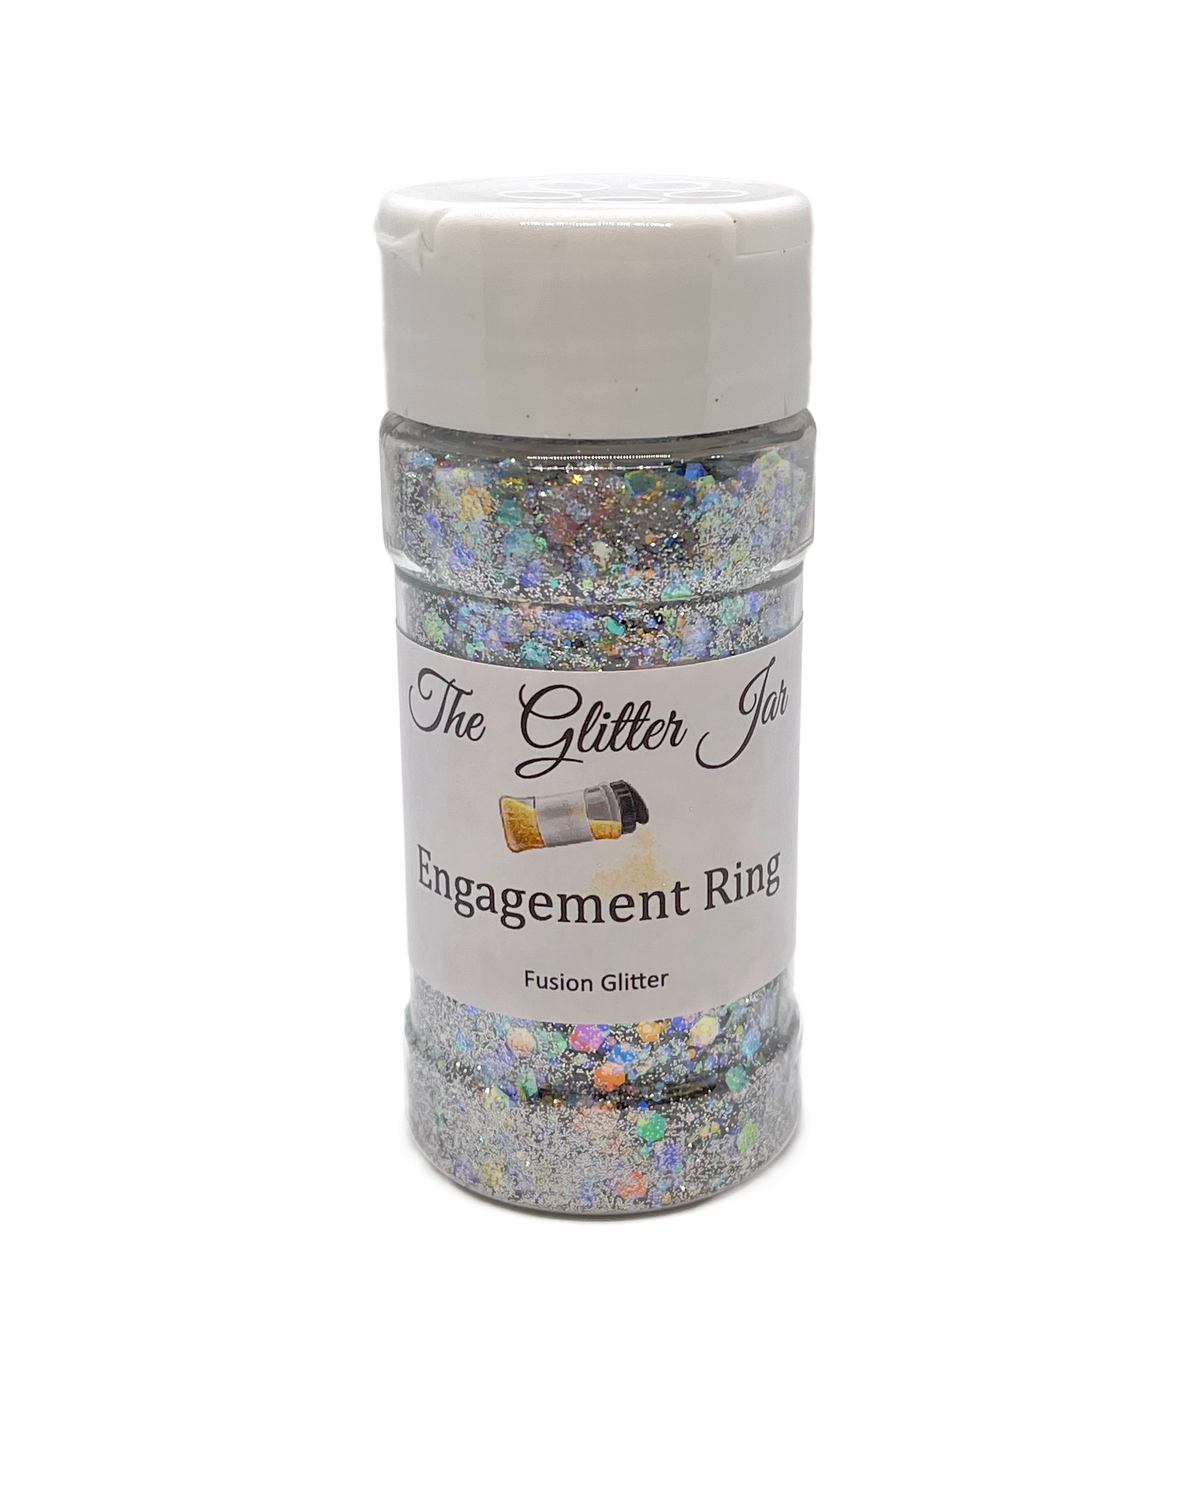 Engagement Ring Fusion Glitter The Glitter Jar